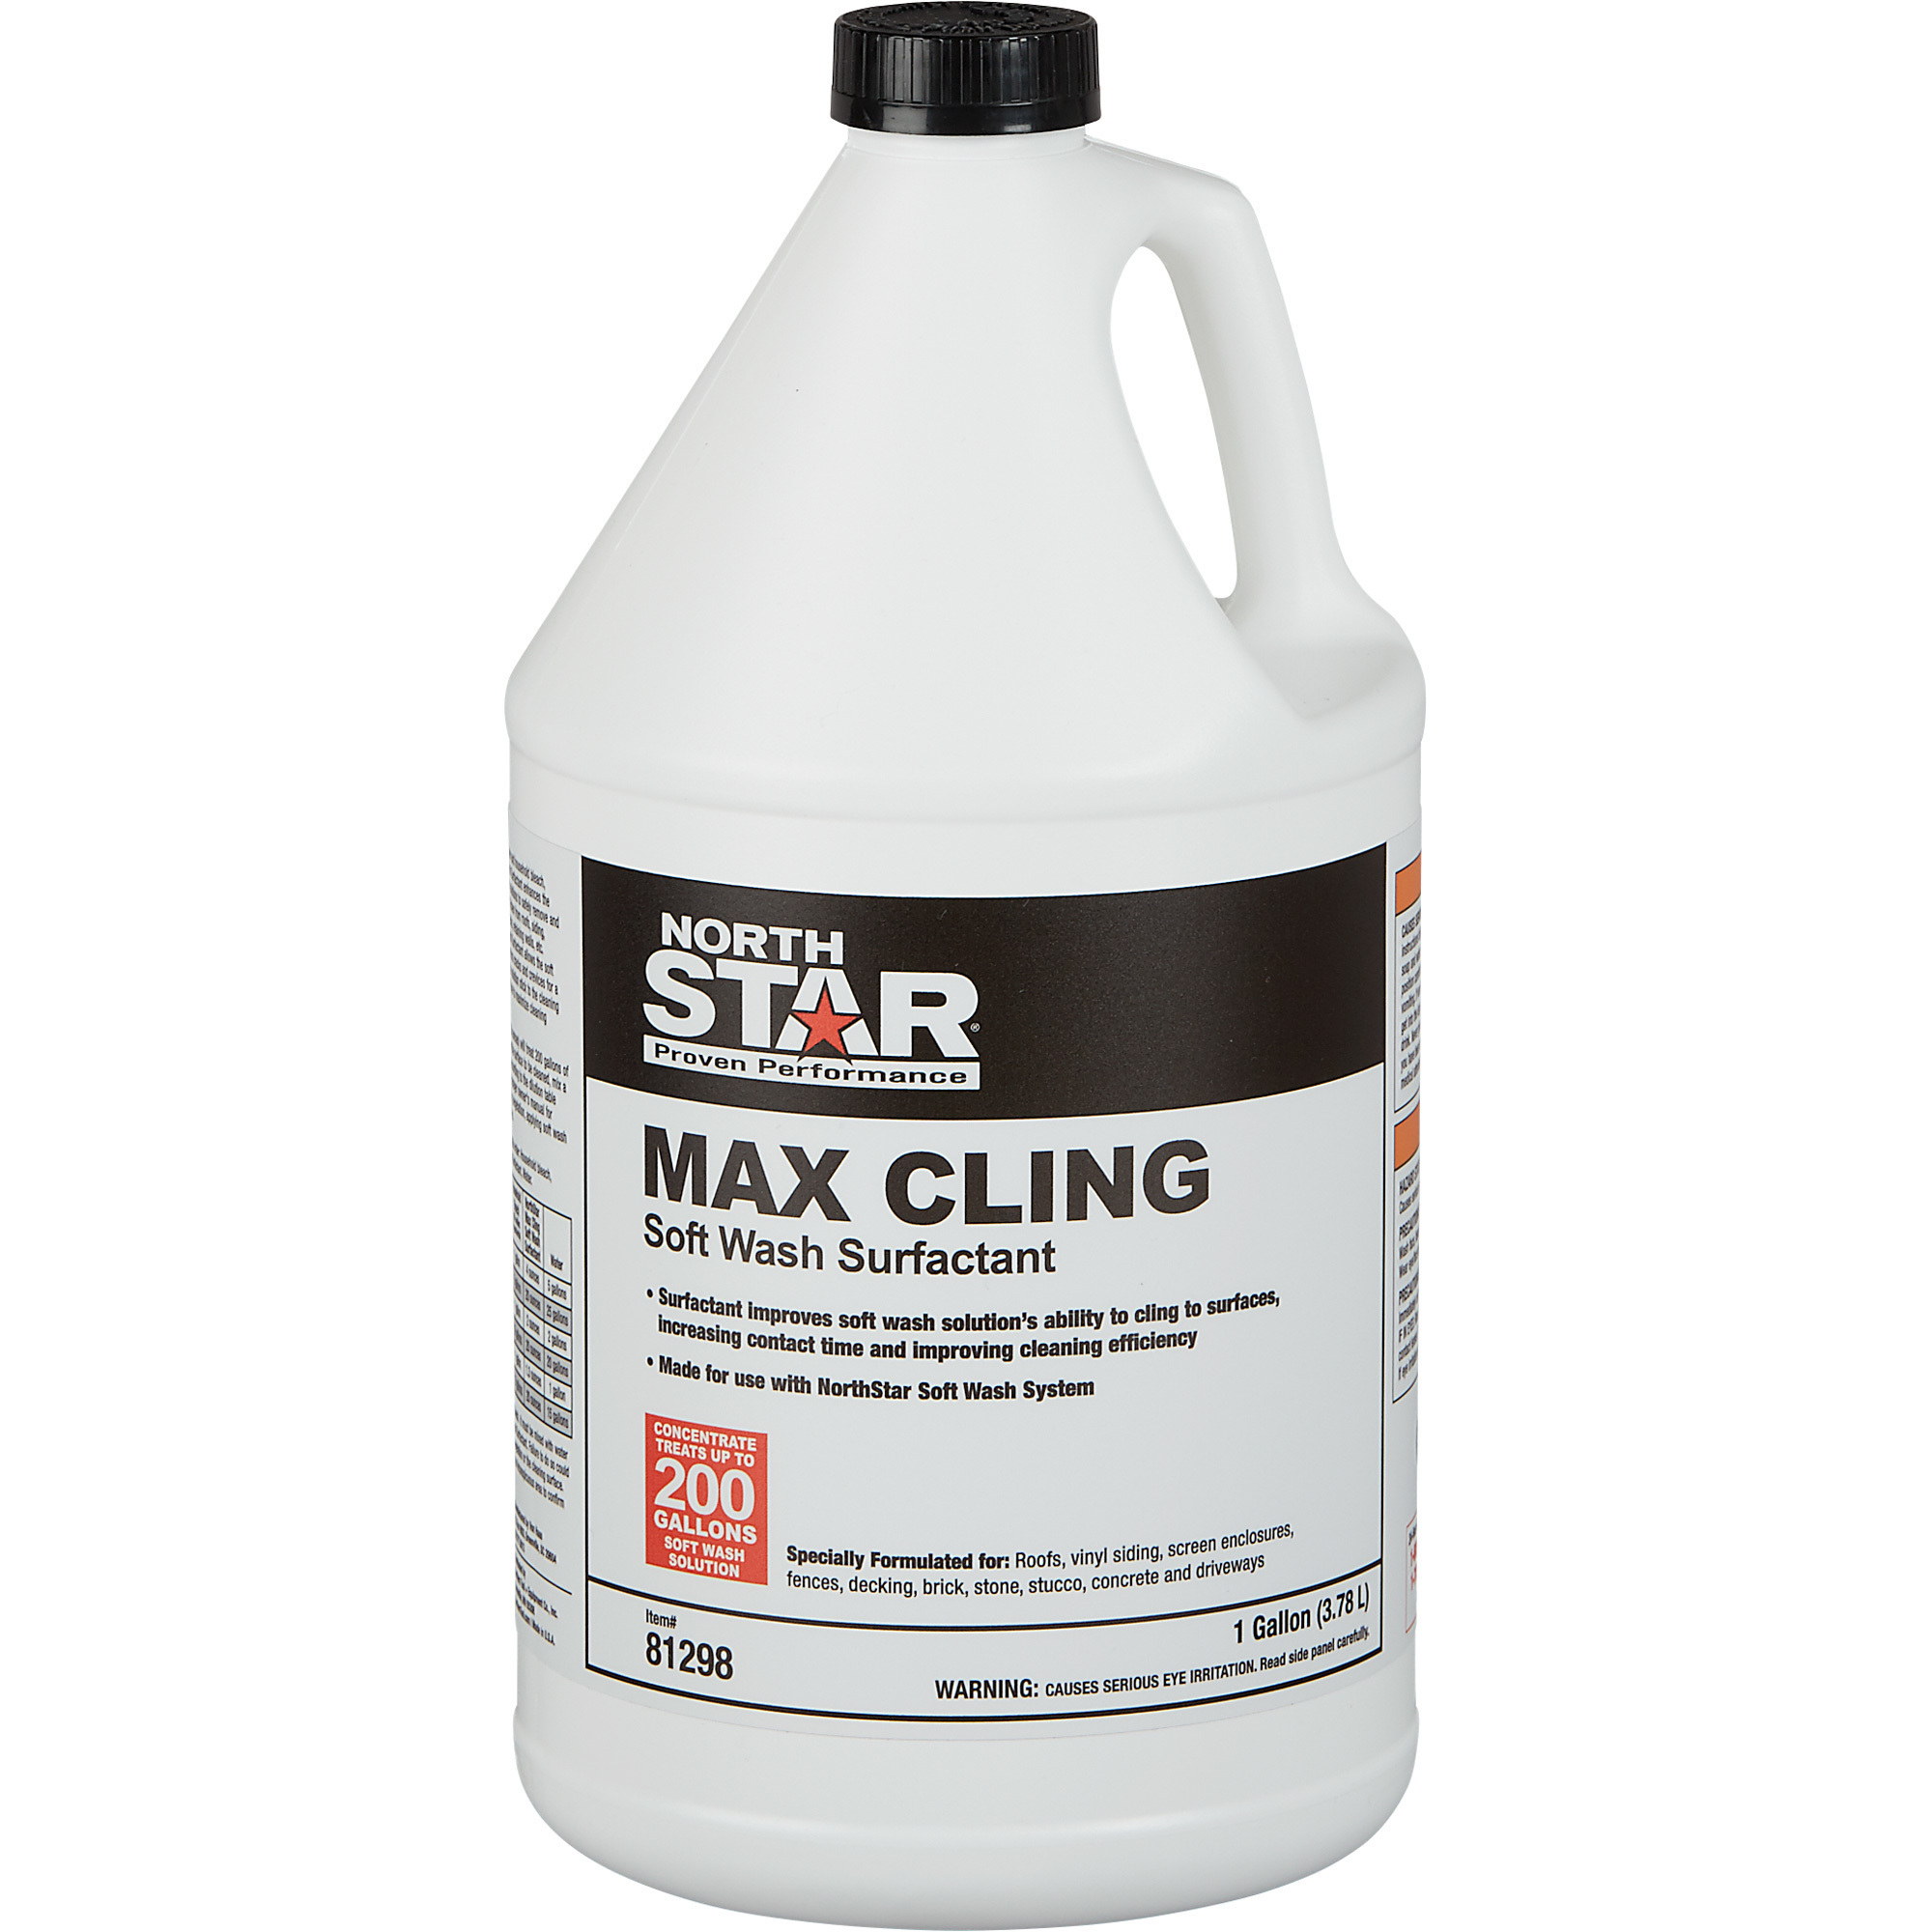 NorthStar Max Cling Soft Wash Surfactant â 1 Gallon